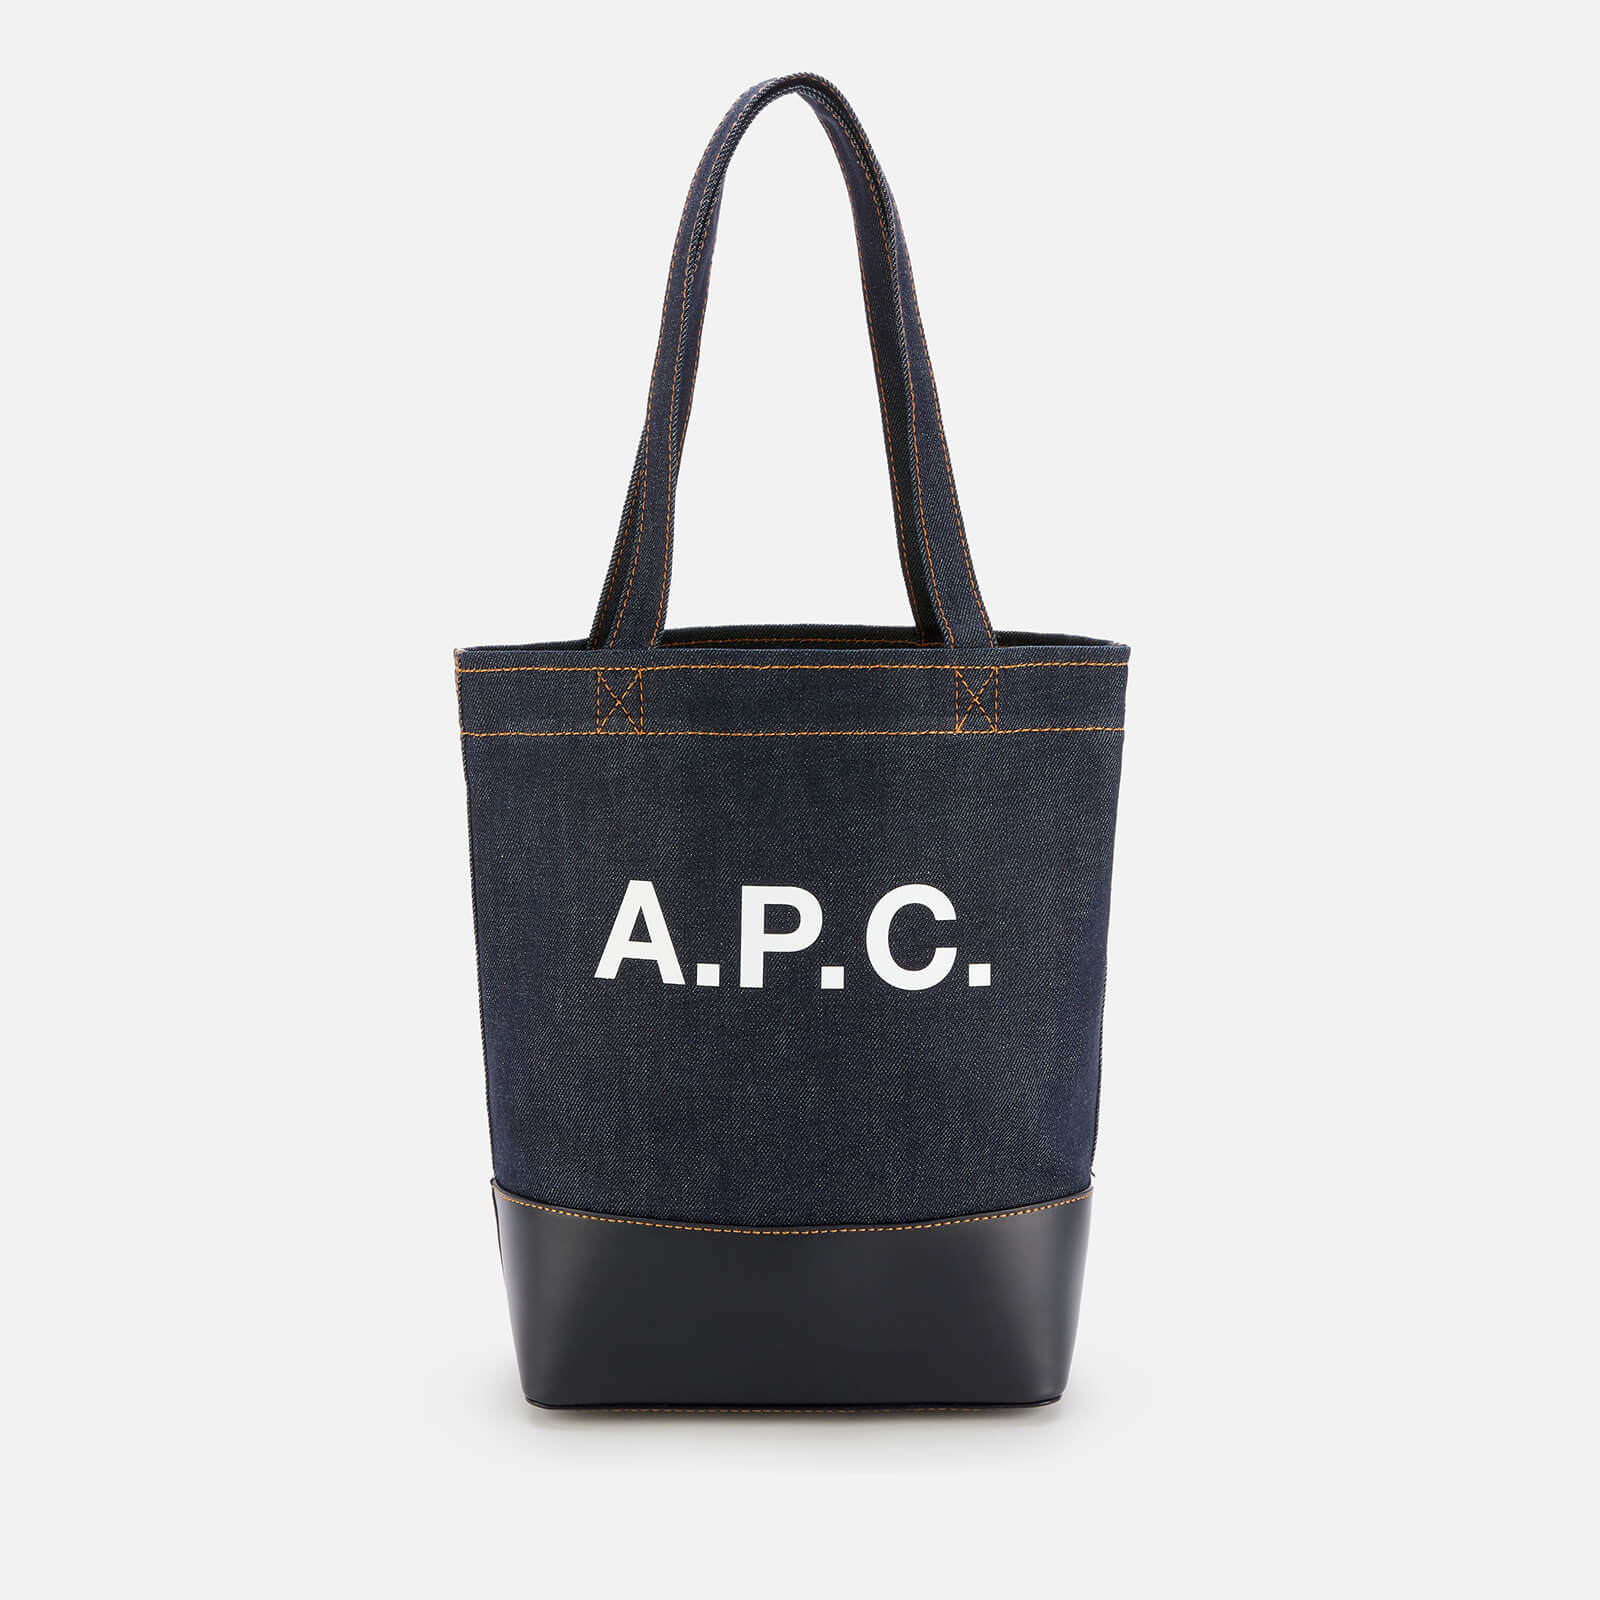 A.P.C. Women's Axel Small Tote Bag - Dark Navy